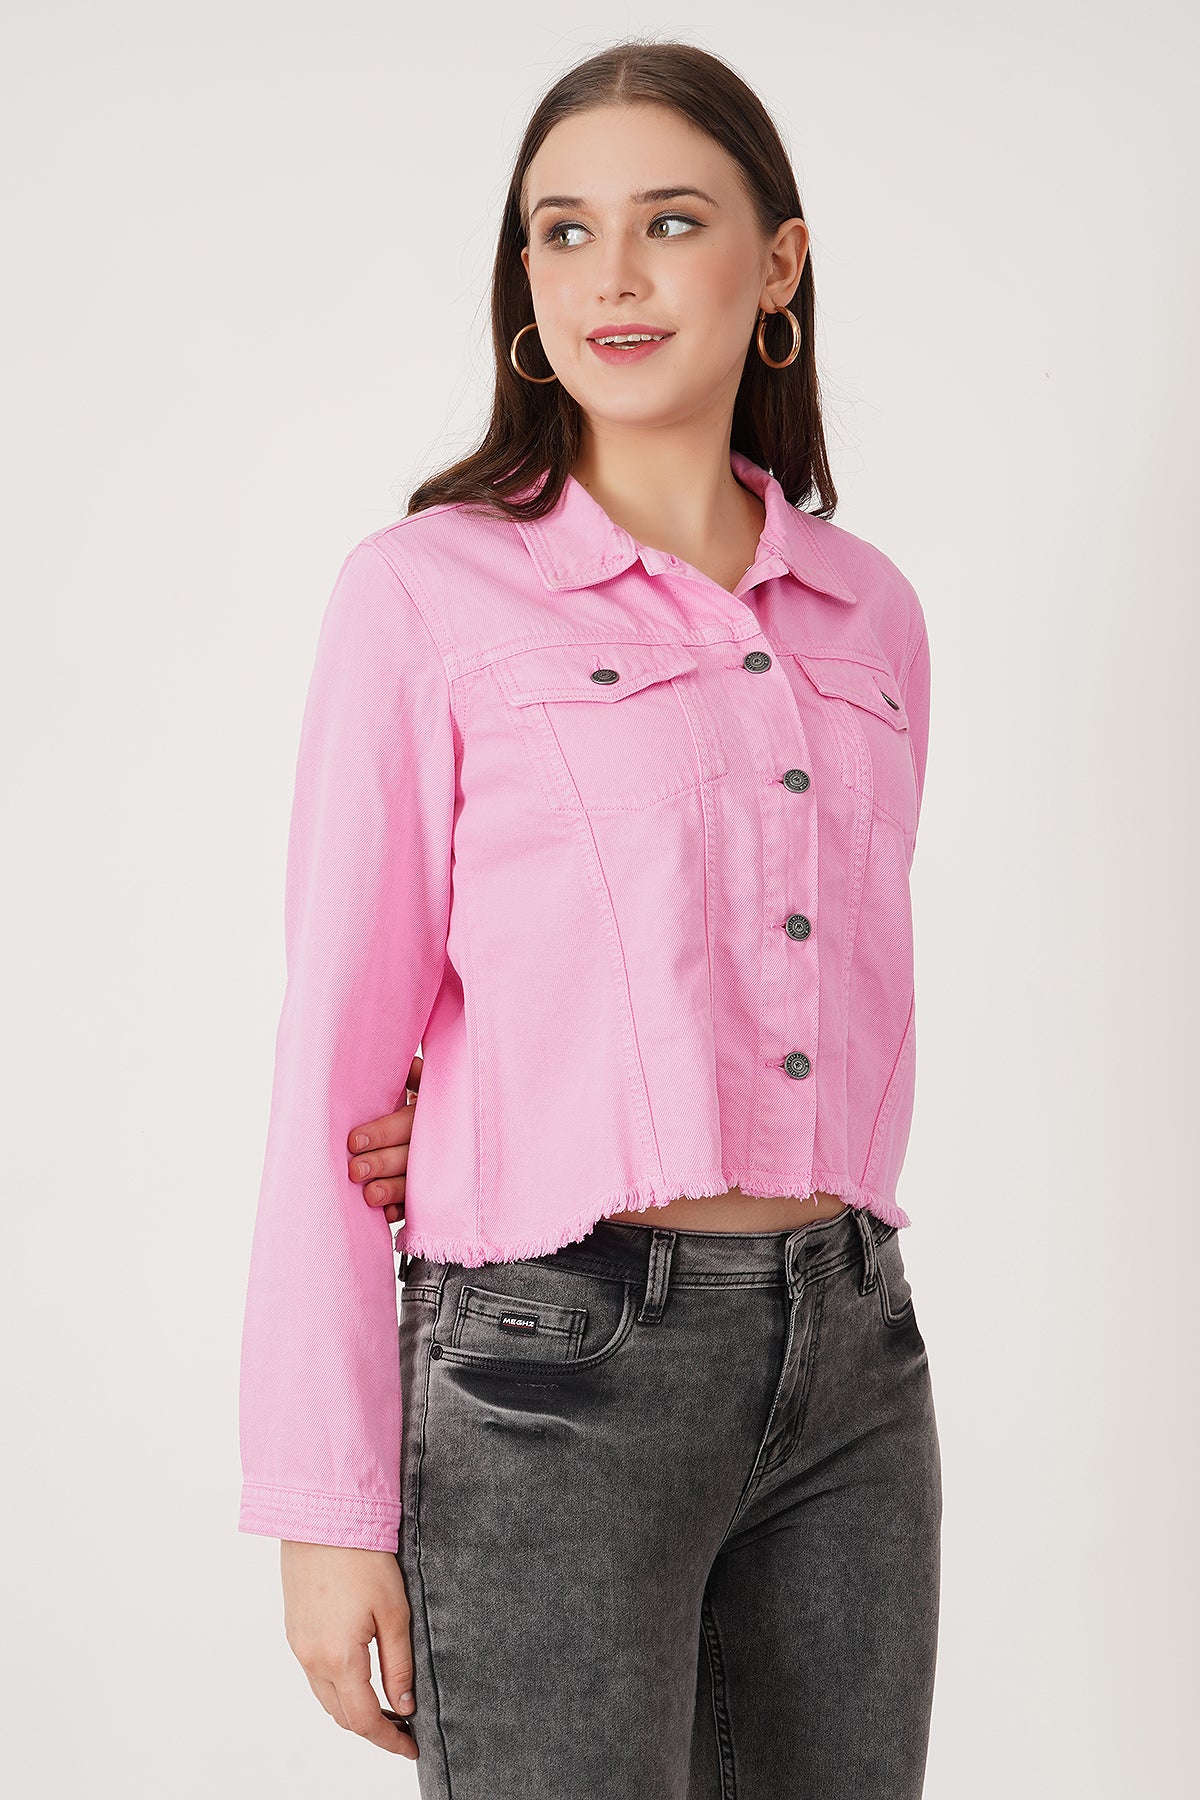 NWT ZARA Women's 100% Cotton Relaxed Fit Short Denim Jacket in Faded Pink  Sz XXL | eBay